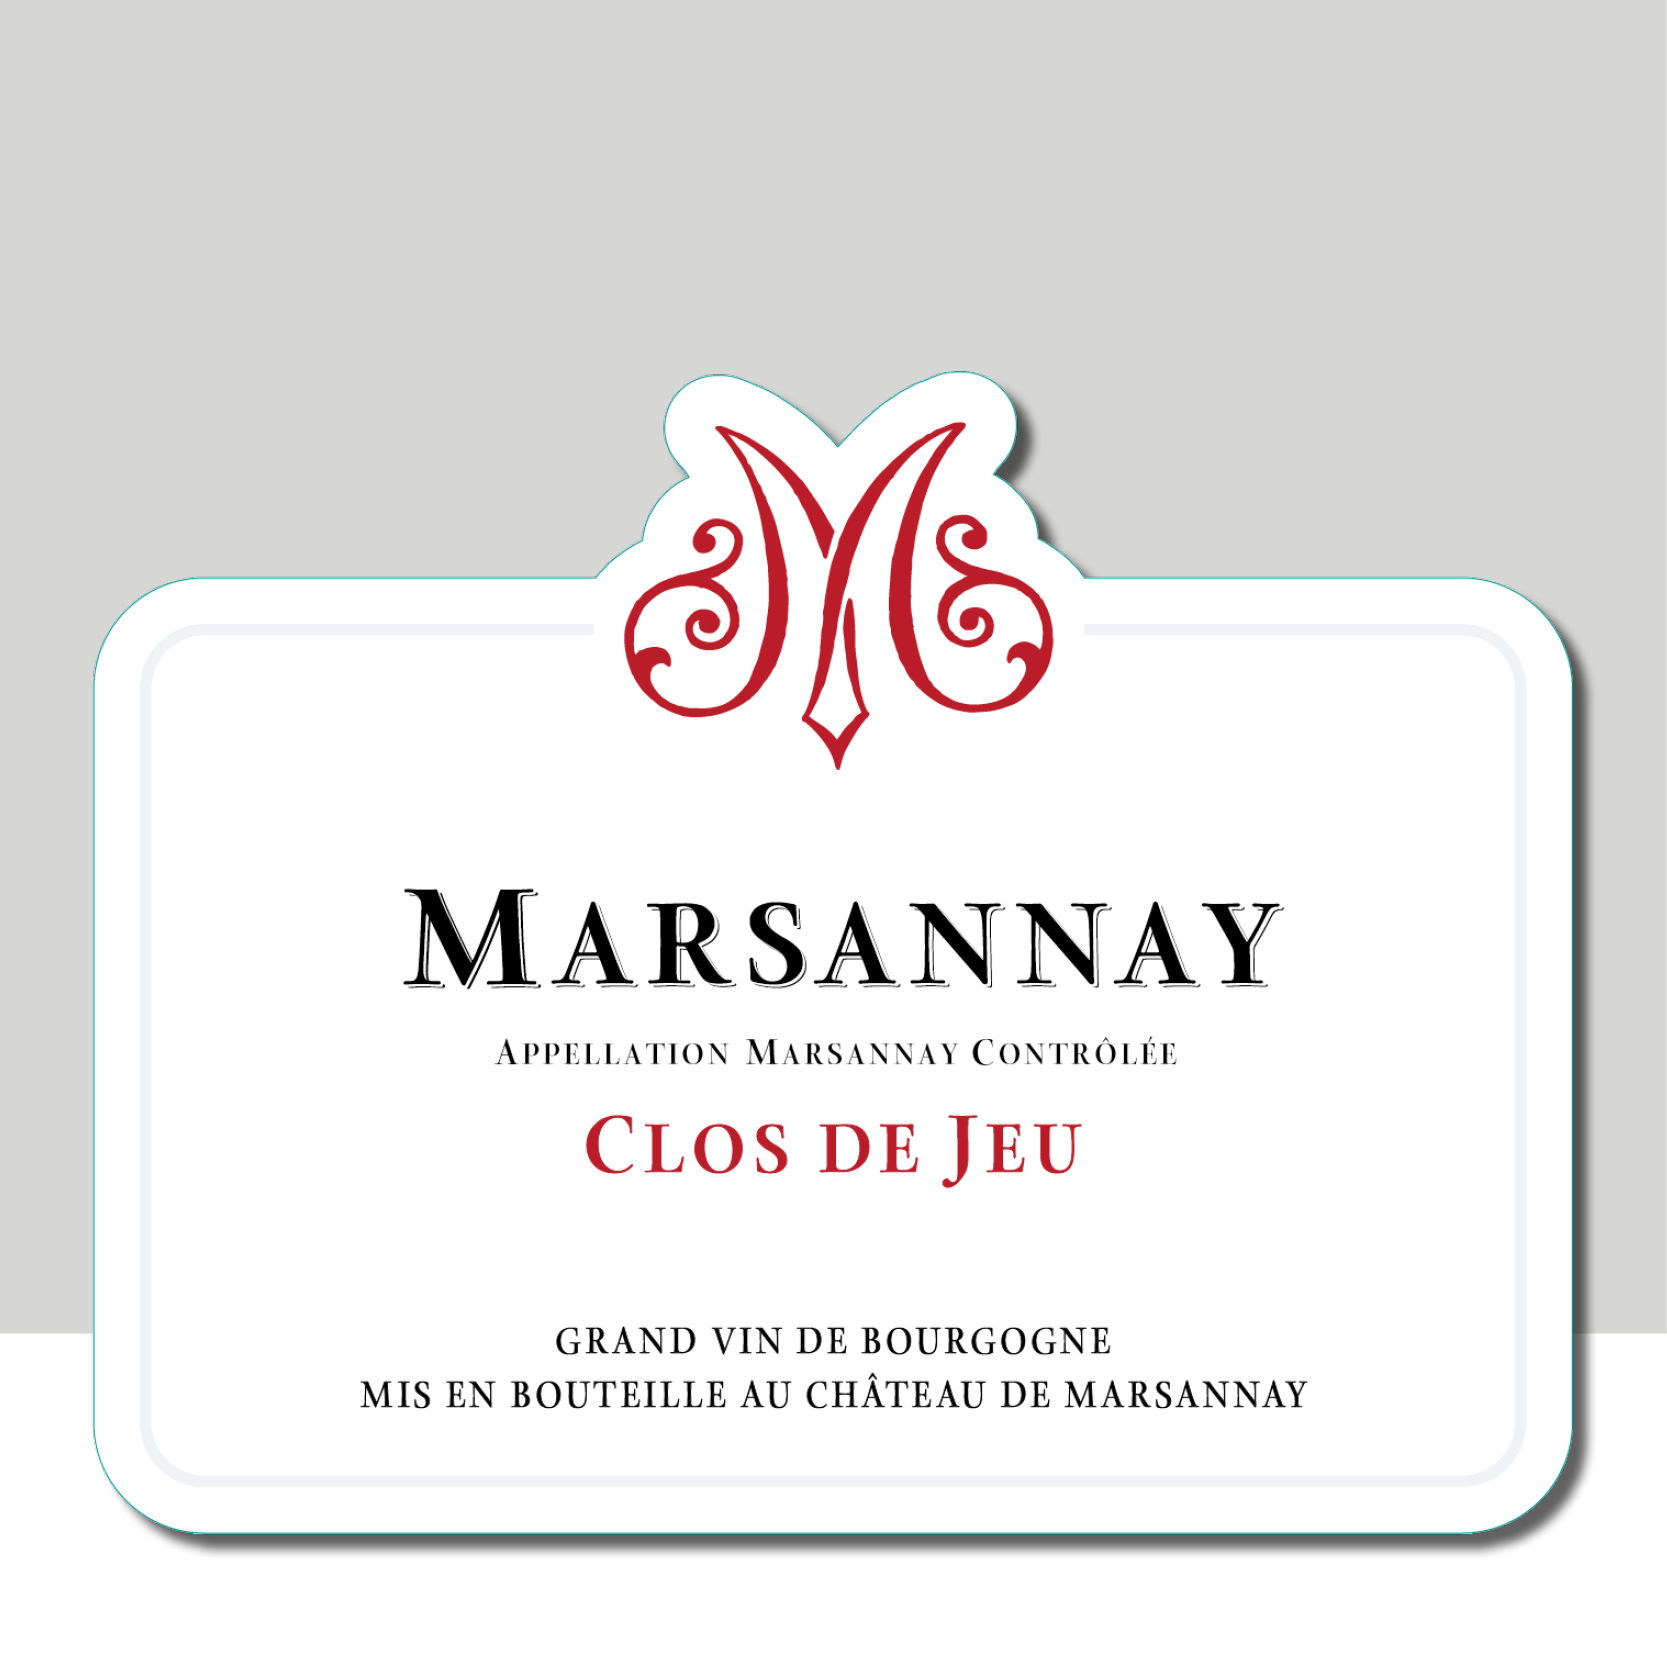 Marsannay Clos de Jeu, Château de Marsannay